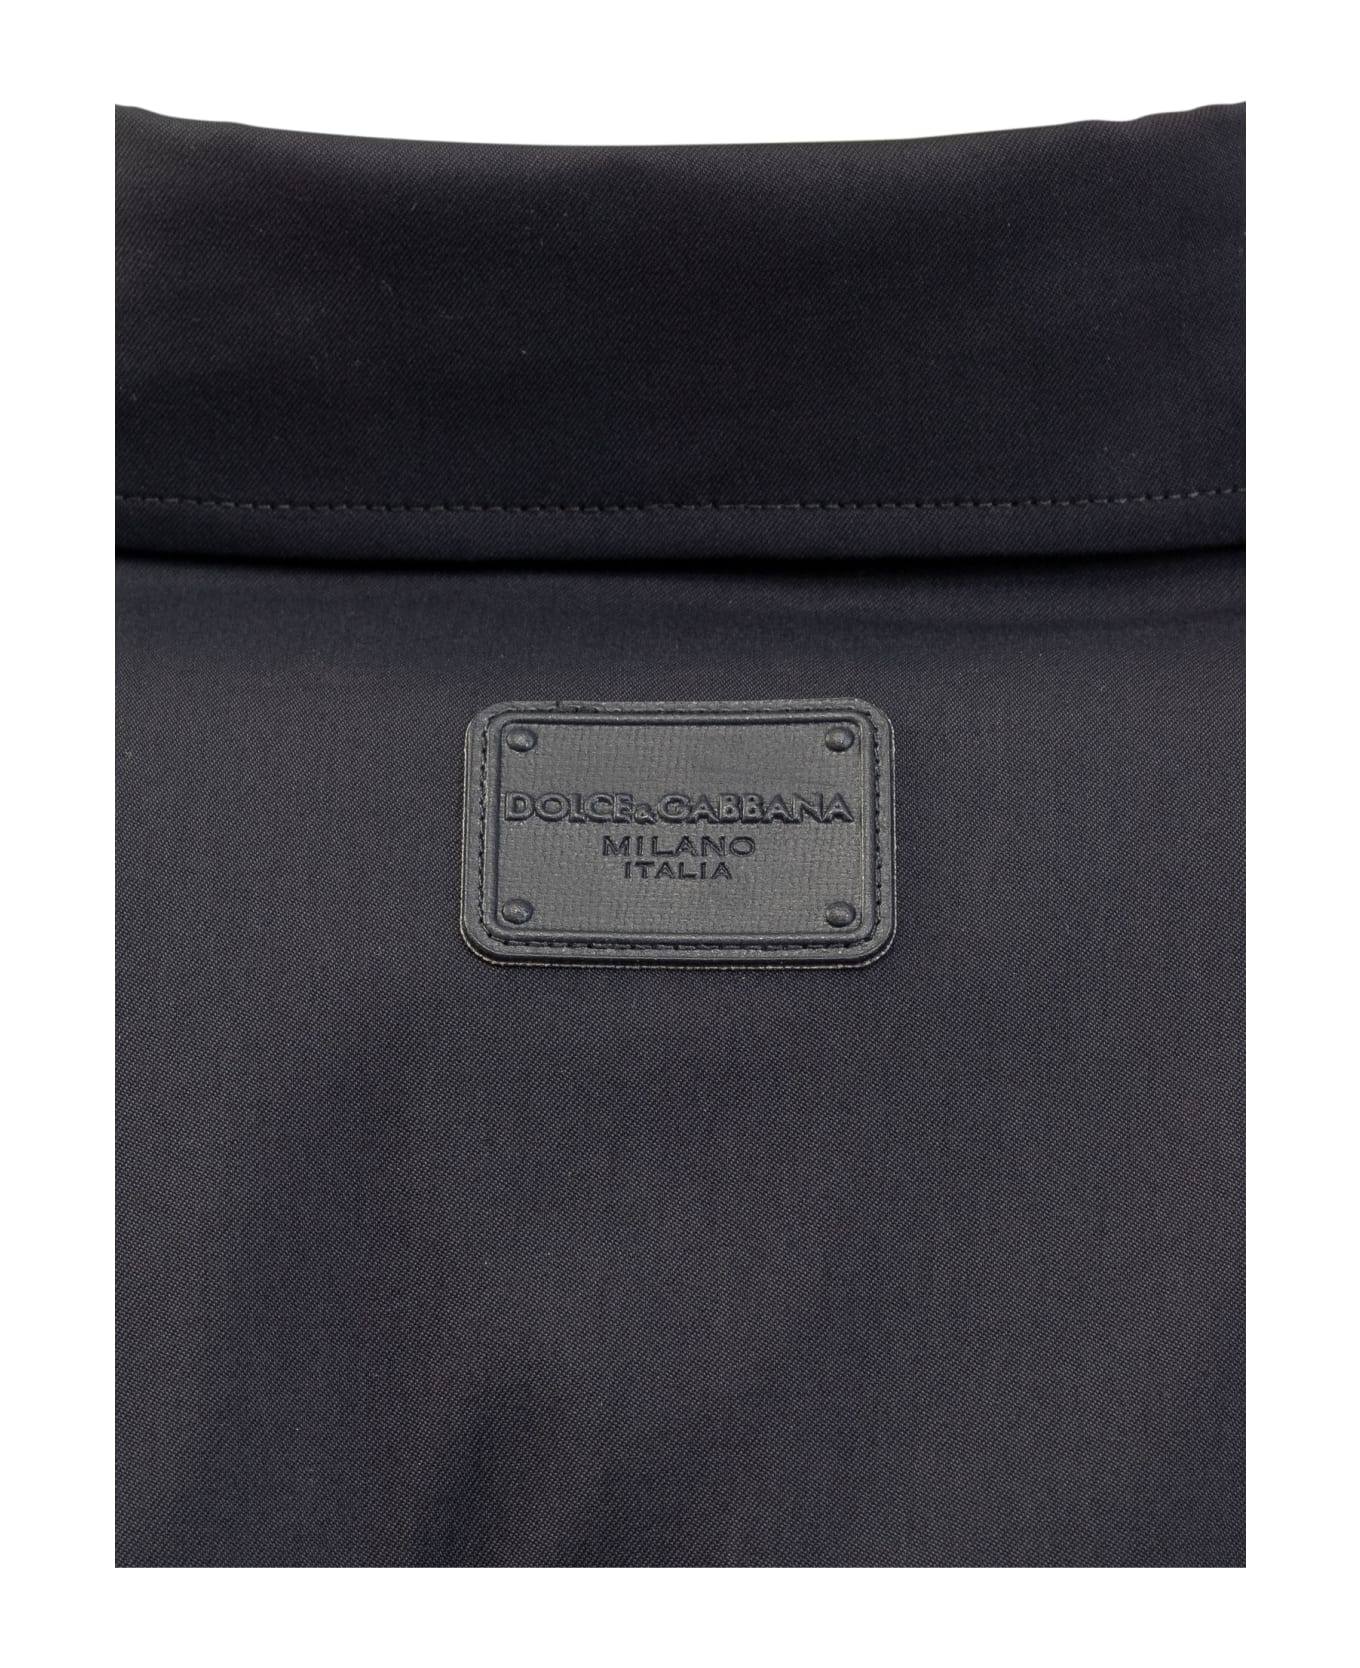 Dolce & Gabbana Technical Fabric Shirt - BLU SCURISSIMO 5 シャツ